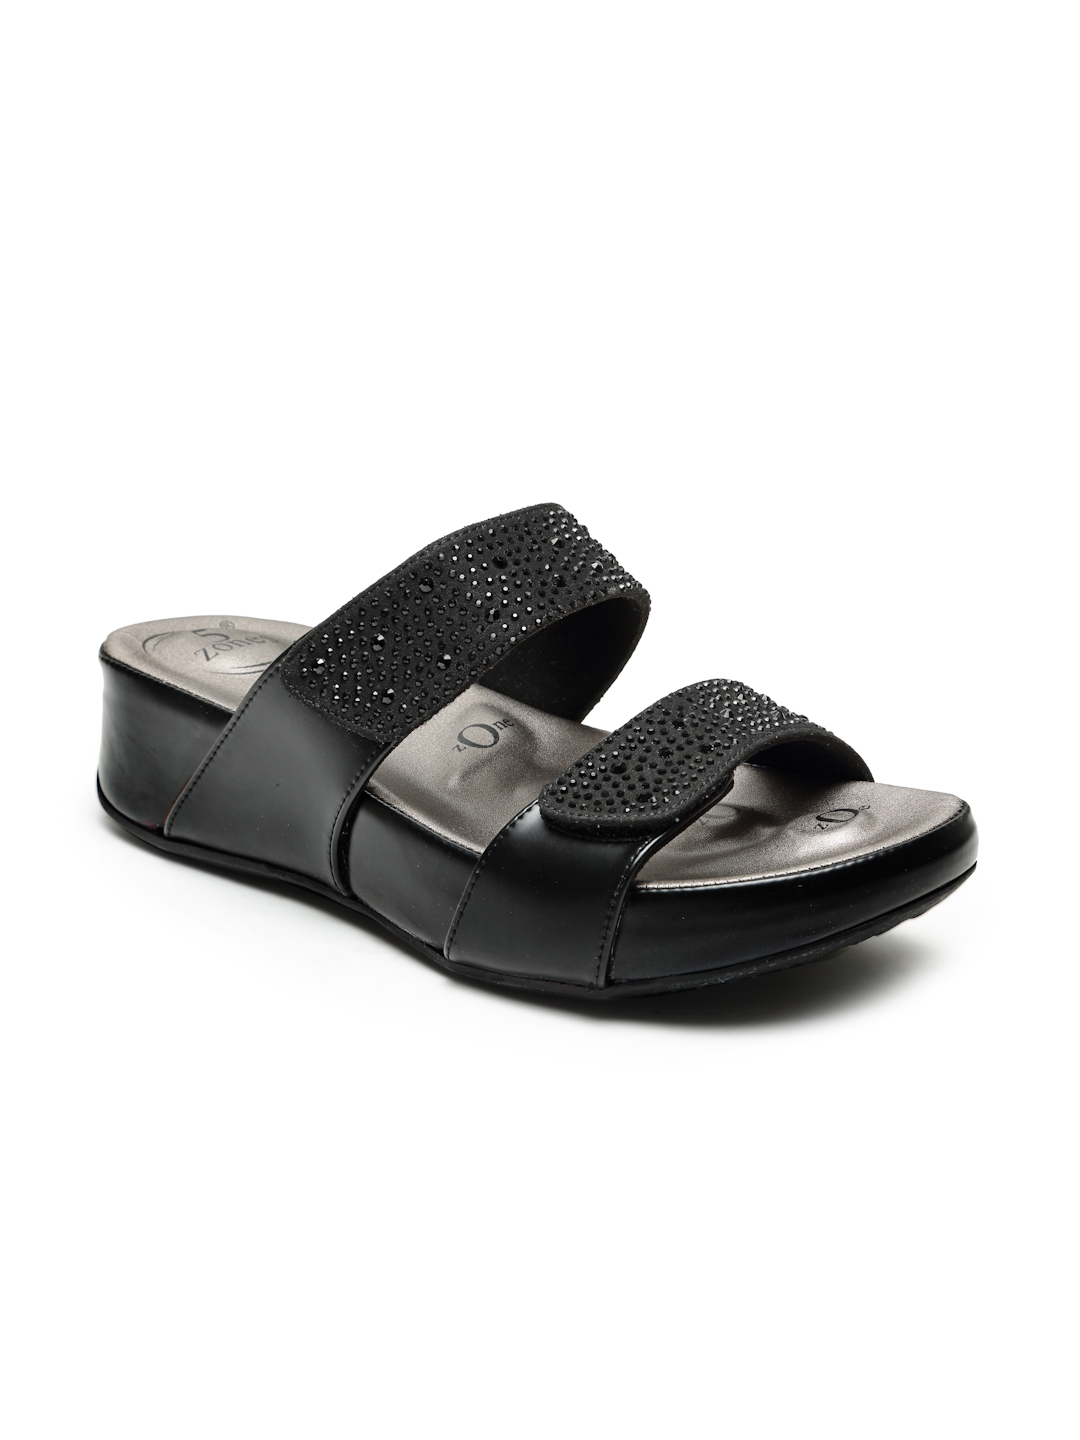 Buy Von Wellx Germany Comfort Women's Black Casual Sandals Paula Online in Dammam